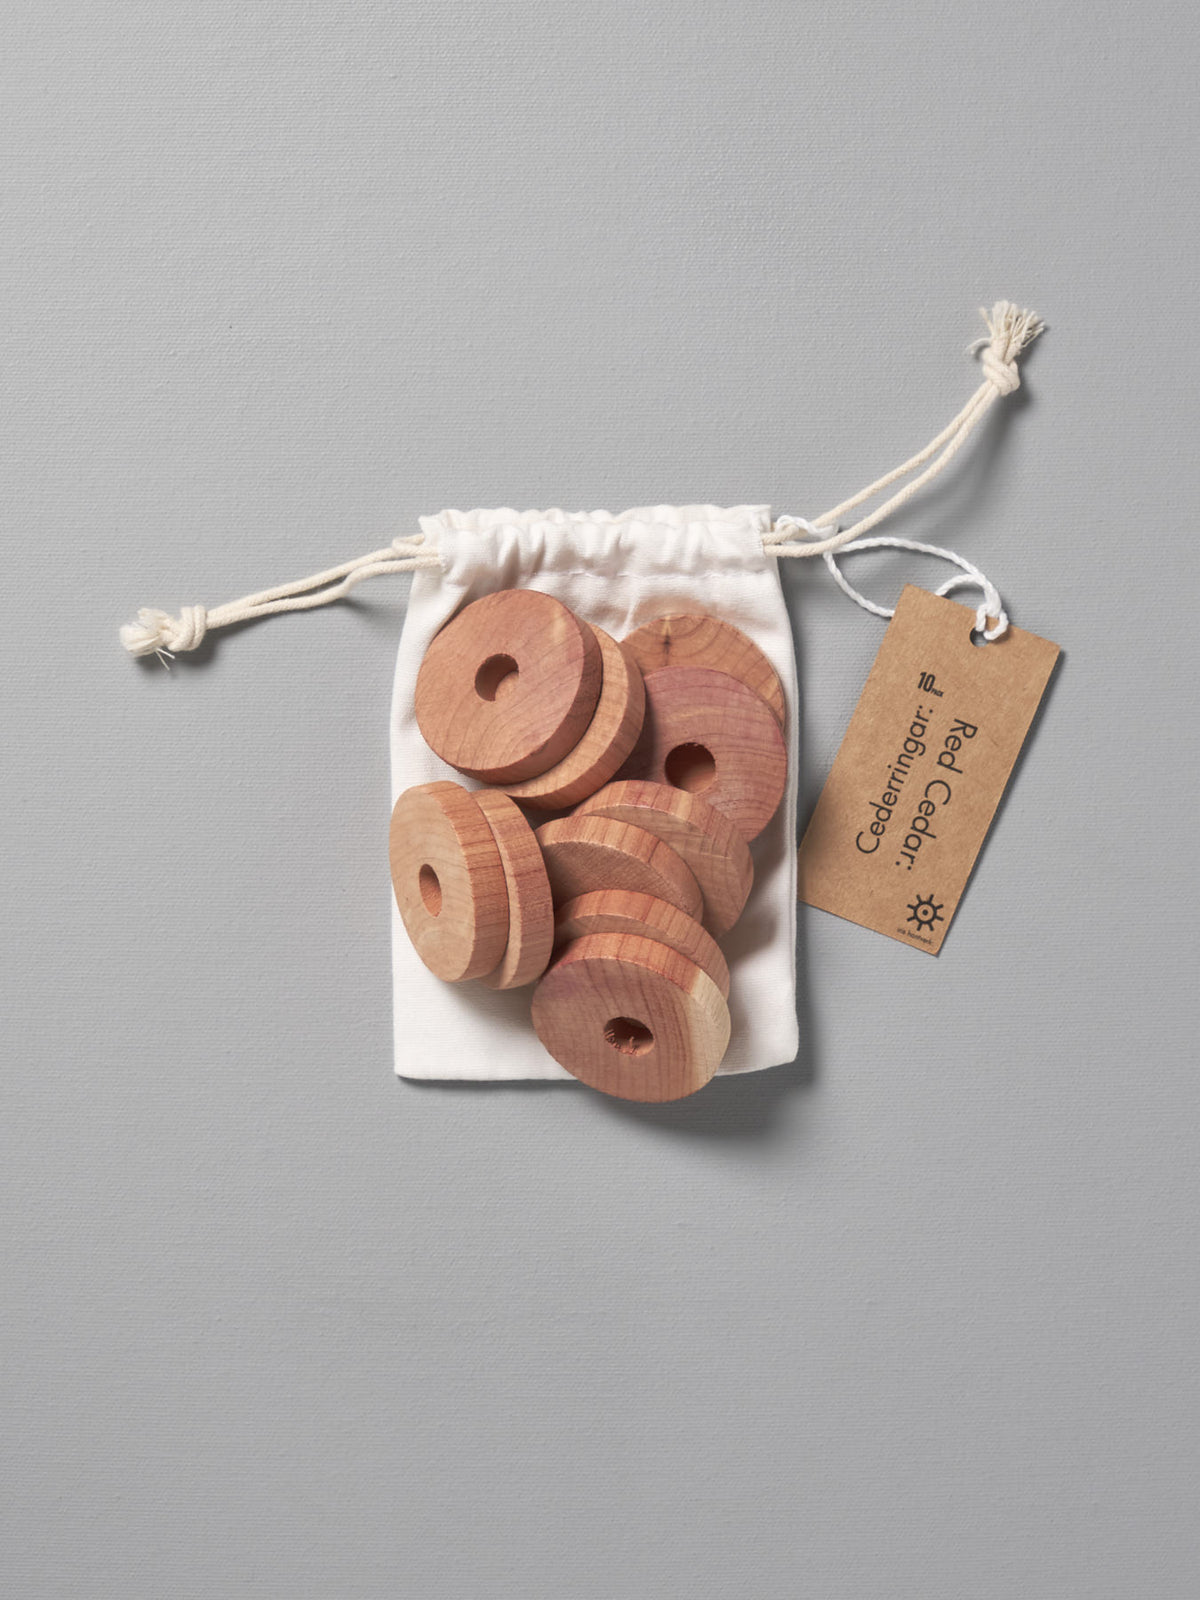 Red Cedar Rings – 10pcs by Iris Hantverk in a bag on a grey background.